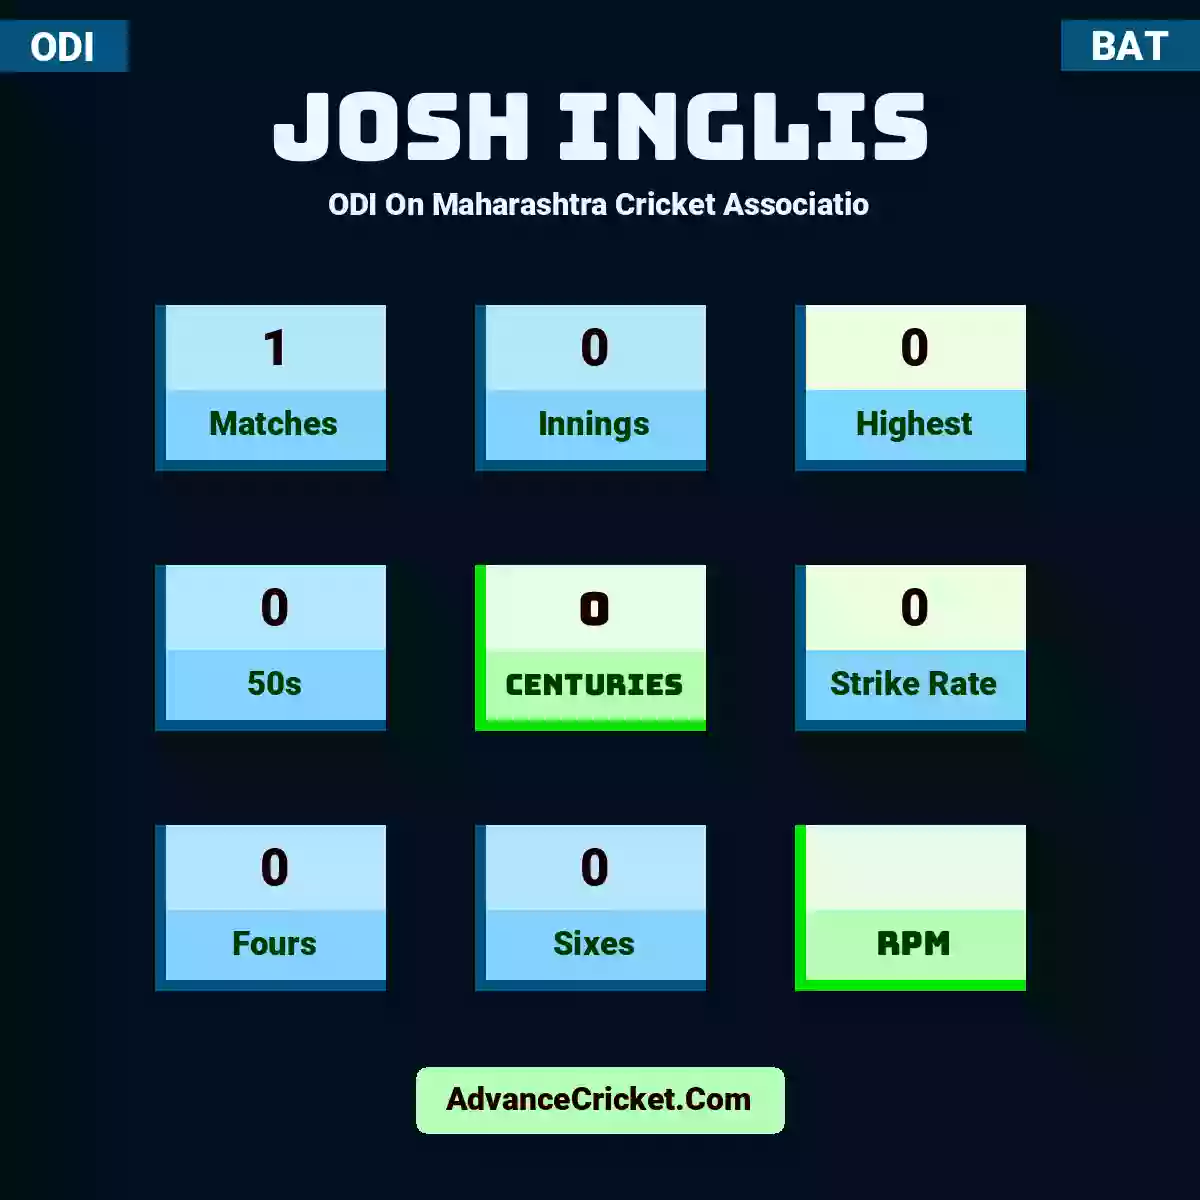 Josh Inglis ODI  On Maharashtra Cricket Associatio, Josh Inglis played 1 matches, scored 0 runs as highest, 0 half-centuries, and 0 centuries, with a strike rate of 0. J.Inglis hit 0 fours and 0 sixes.